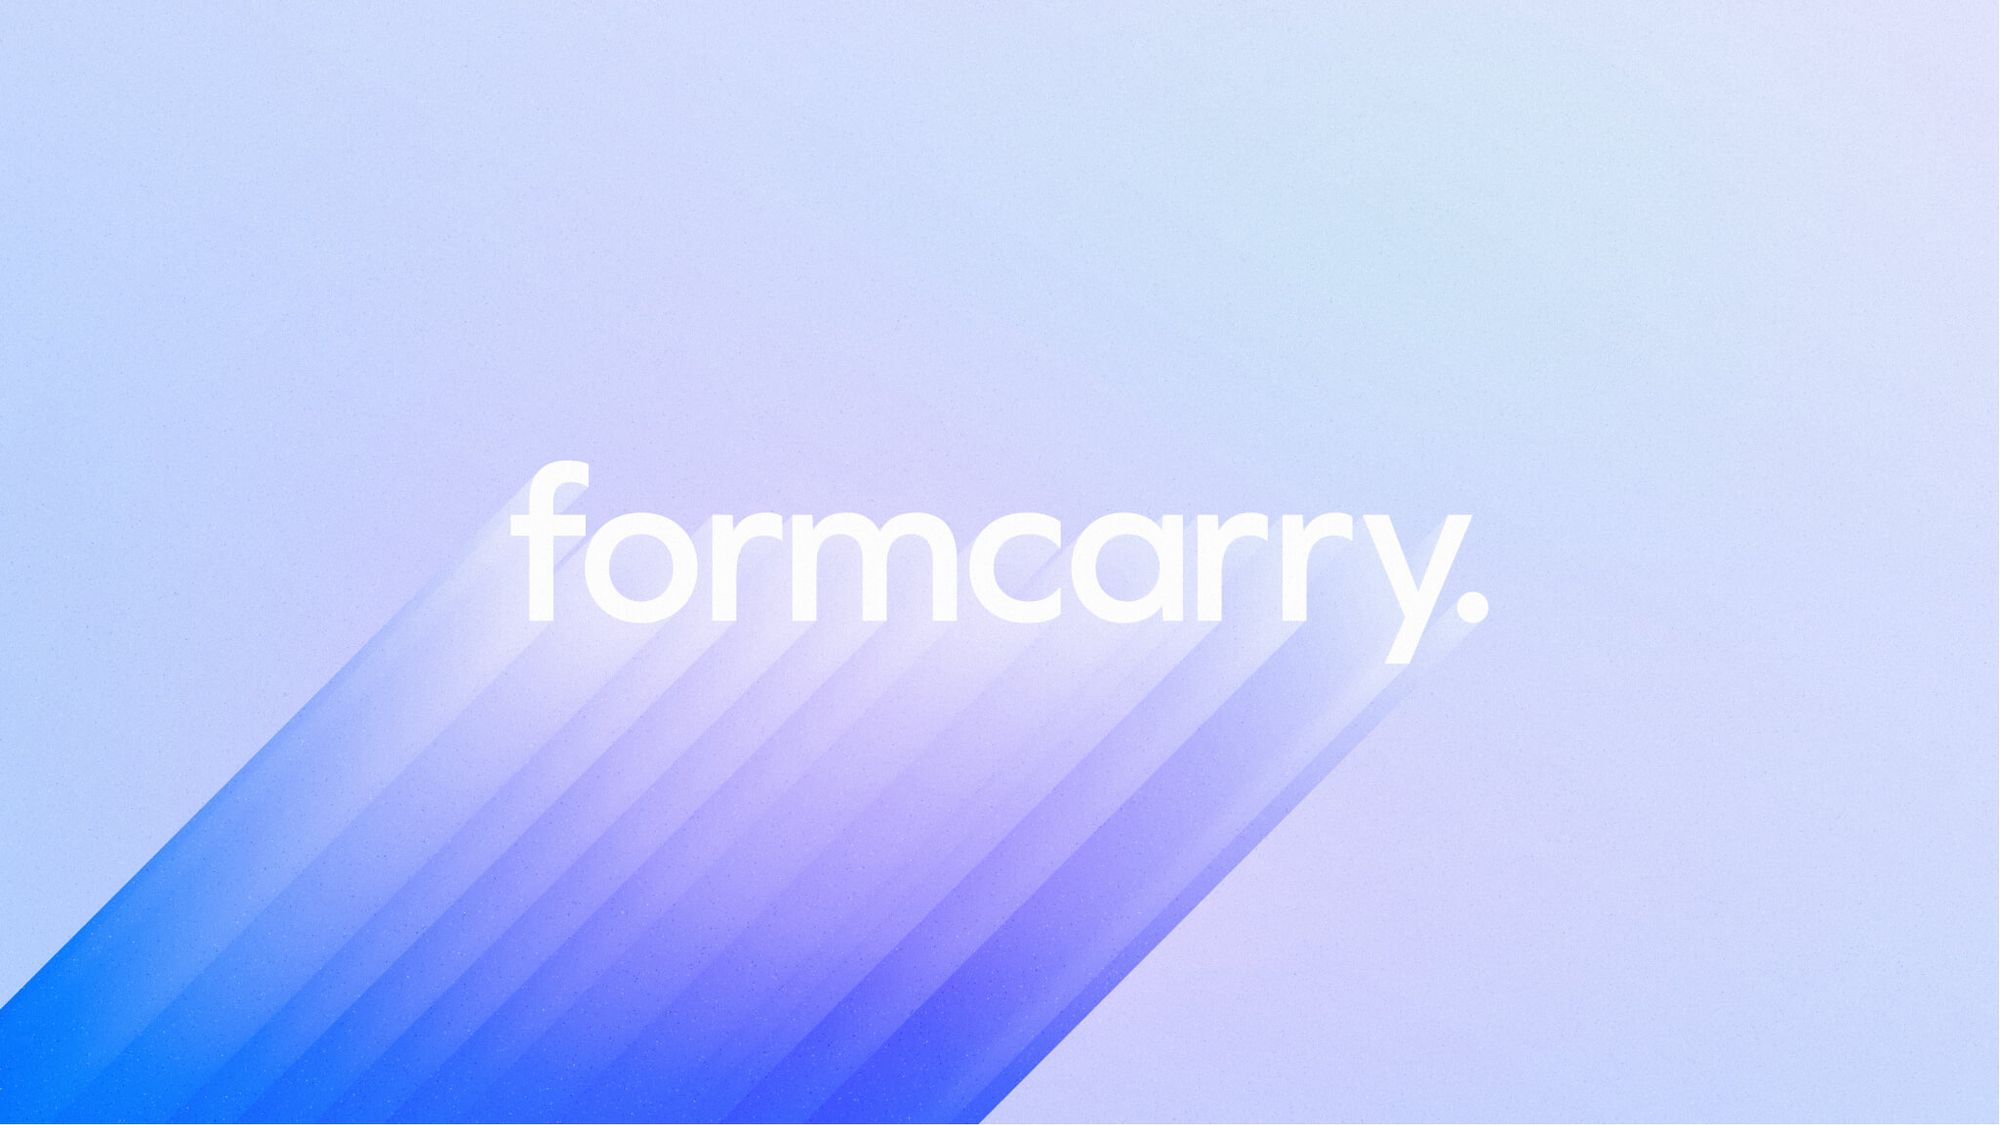 Formcarry Blog